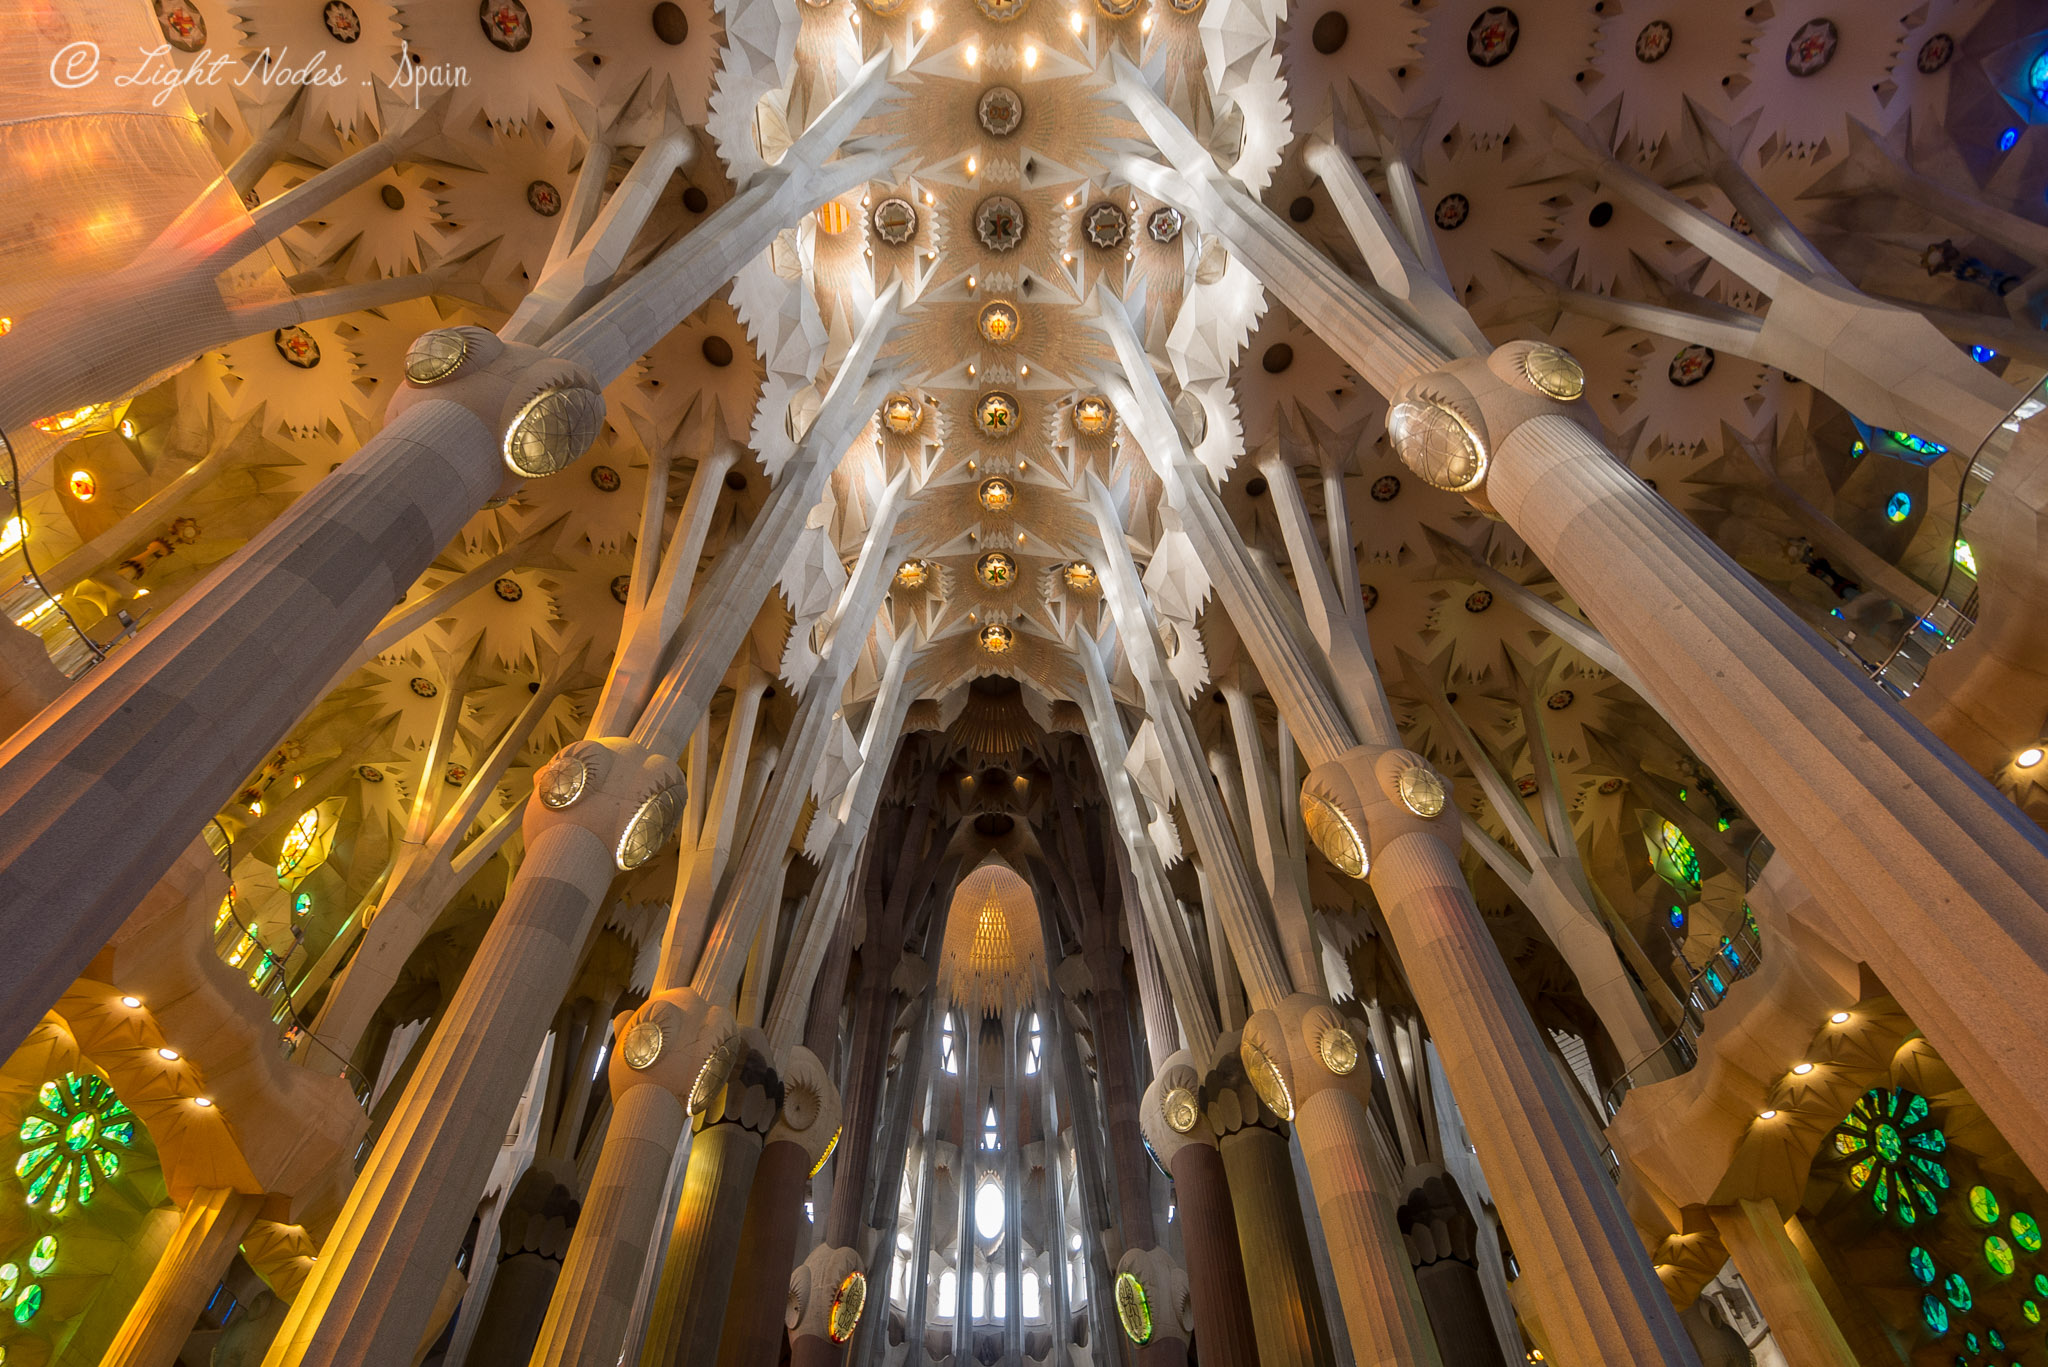 La Sagrada Família (Gaudi designed Church), Barcelona with GX7